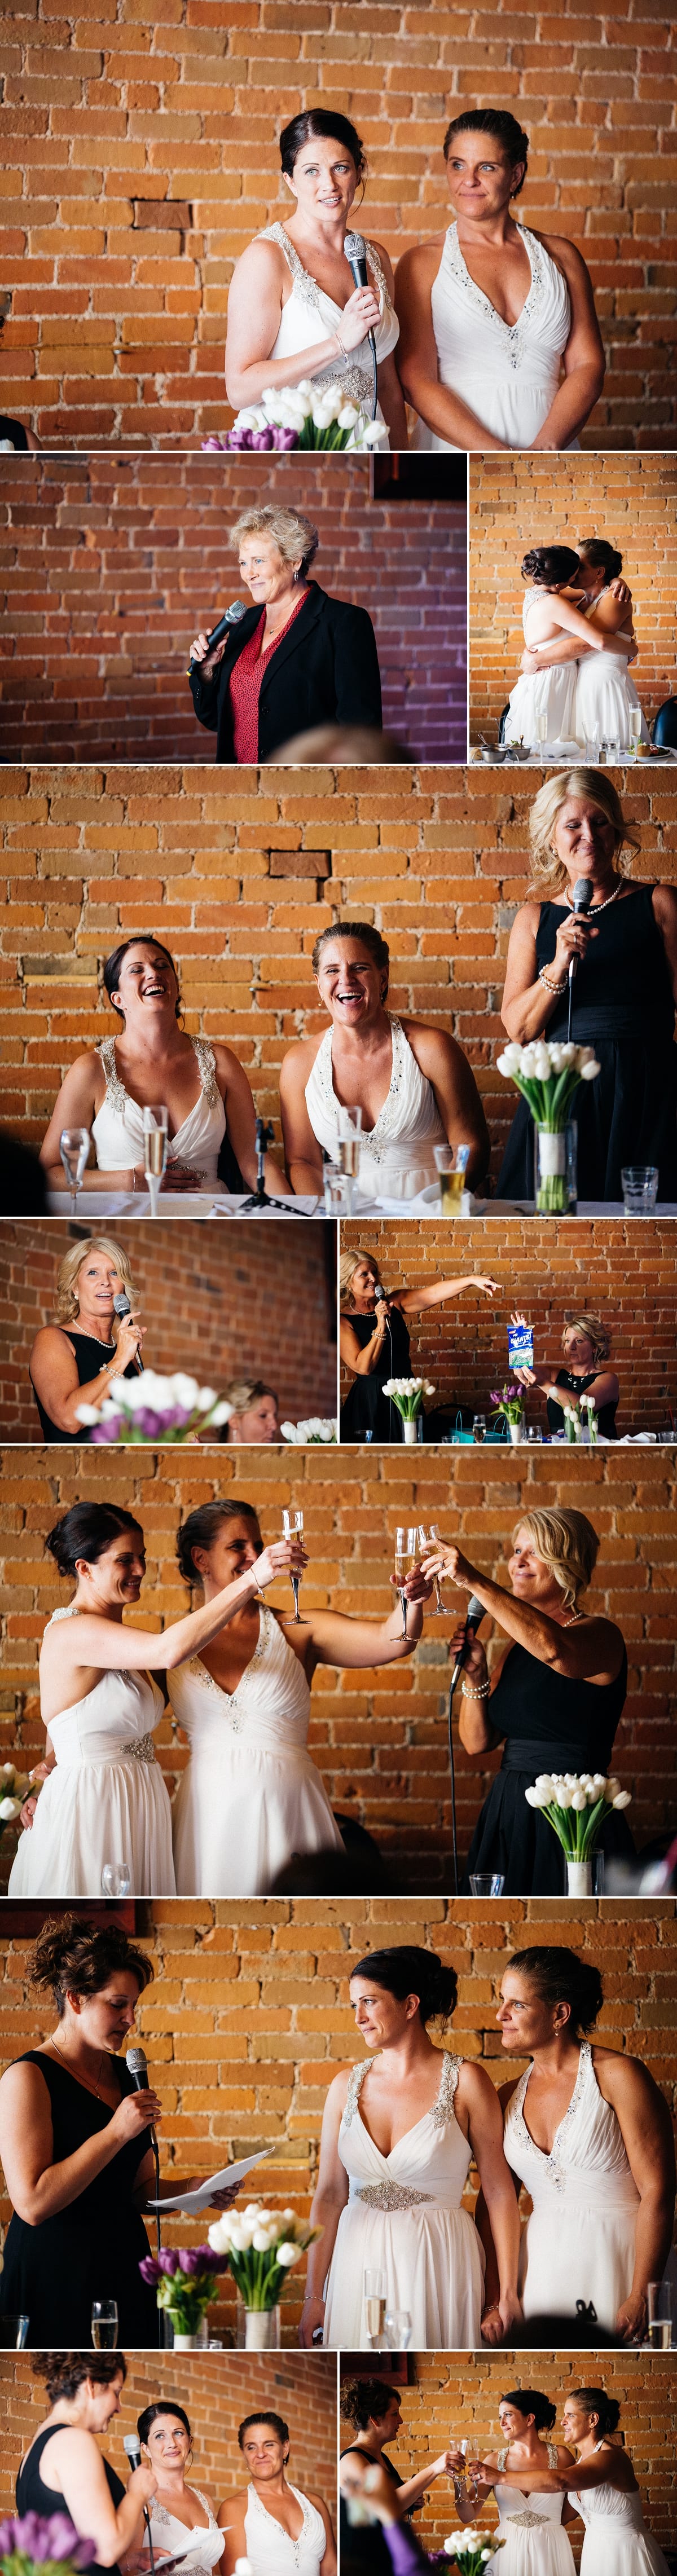 Beth and Gina Shakopee Wedding Photography 20